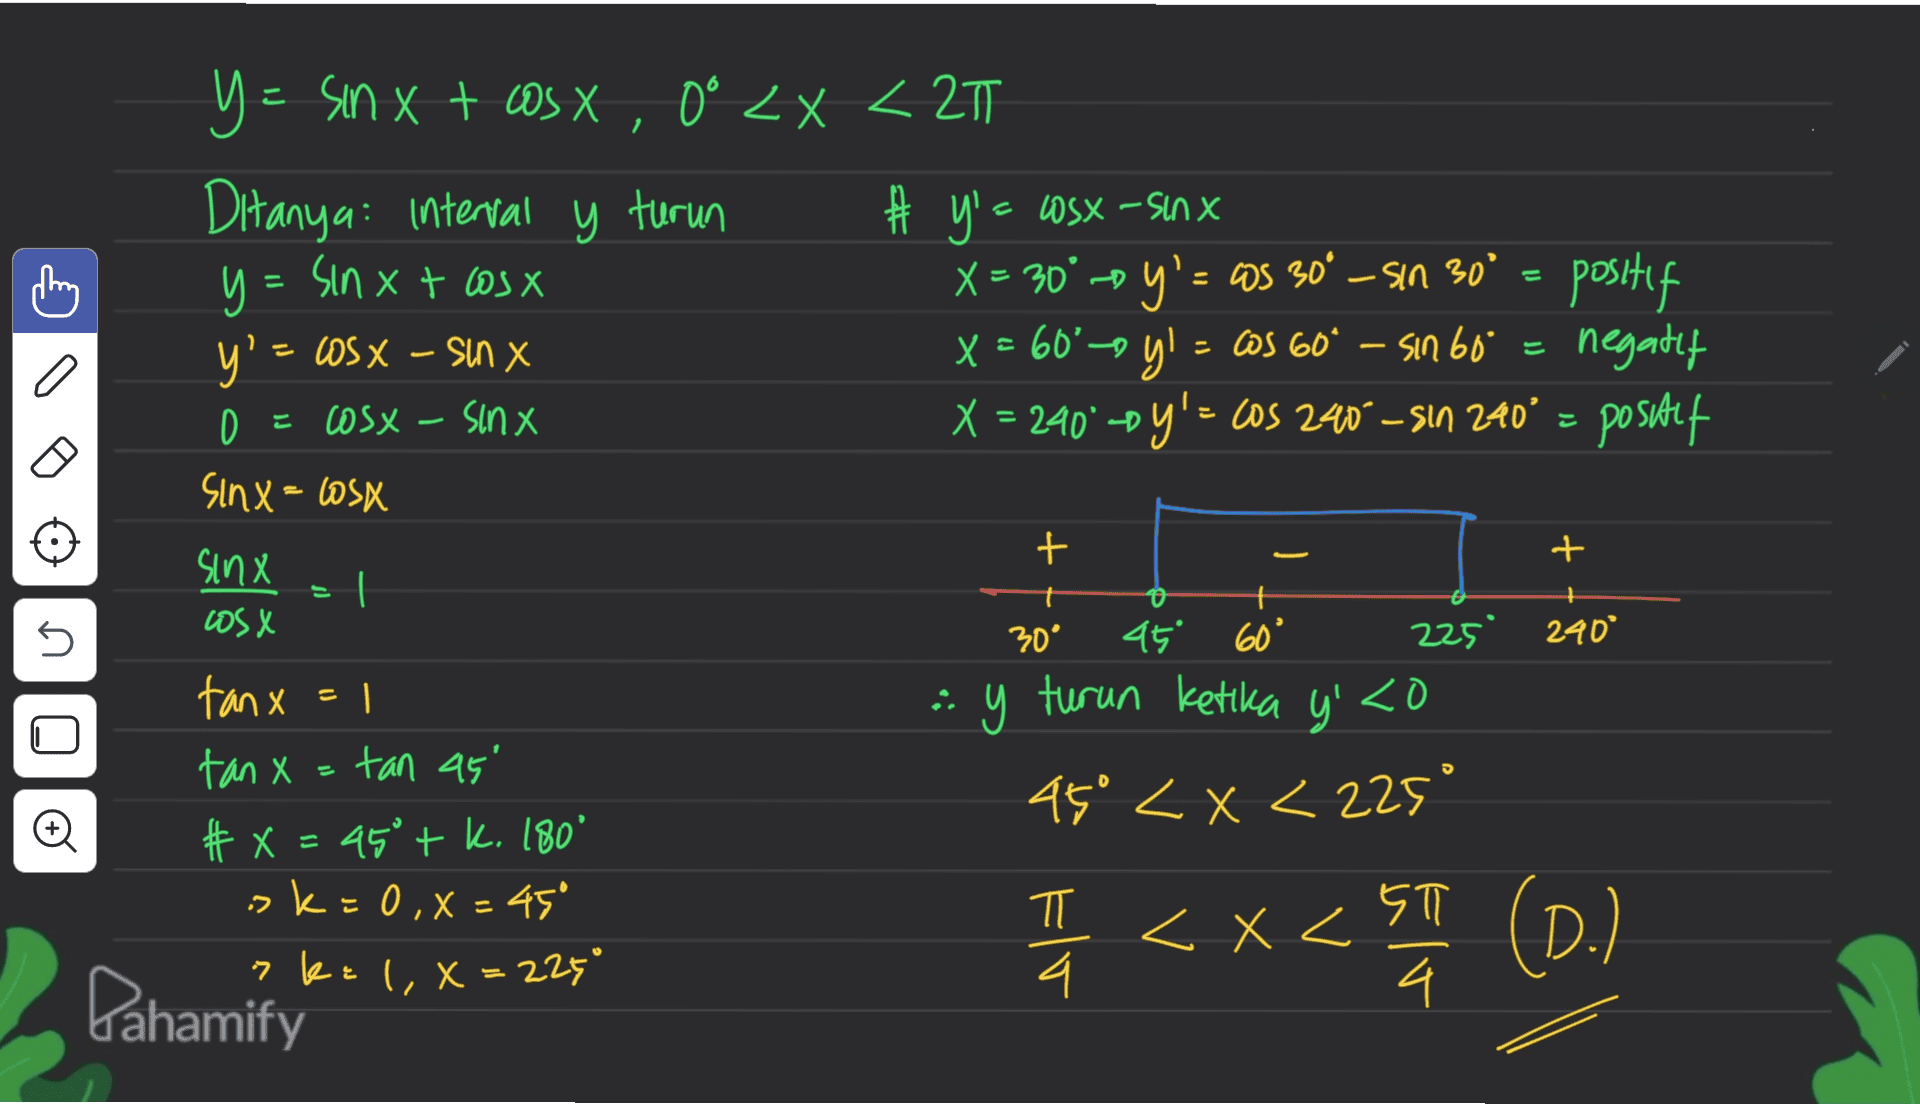 こ 1 # y = Y = sin x + os X, 0° <x<27 Ditanya: interval y turun # x - osx - sinx y = = sin x + cosx X = 30' -o y'CS — = Os 30° - sin 30° = positif y' = WSX – sin X x ' x = 60°-oy! = 6S 60° – Sın 60° cos " sin negatif 0 = cosx-Sinx X = 240 -sy'= cos 240° – Sın 240' = positif Sinx = Cosx = + t sinx cosx 30° 225 240° noo 45 60° ay turun ketika y' <o 45° < x < 225° tanx=1 · ] tan x = tan 45' # X = 45° + k. 180° k = 0,X = 45 ?k= 1,8=225° I < x < ET (0.1 D.) ㅠ 4. < X ST 4 는 Pahamify 